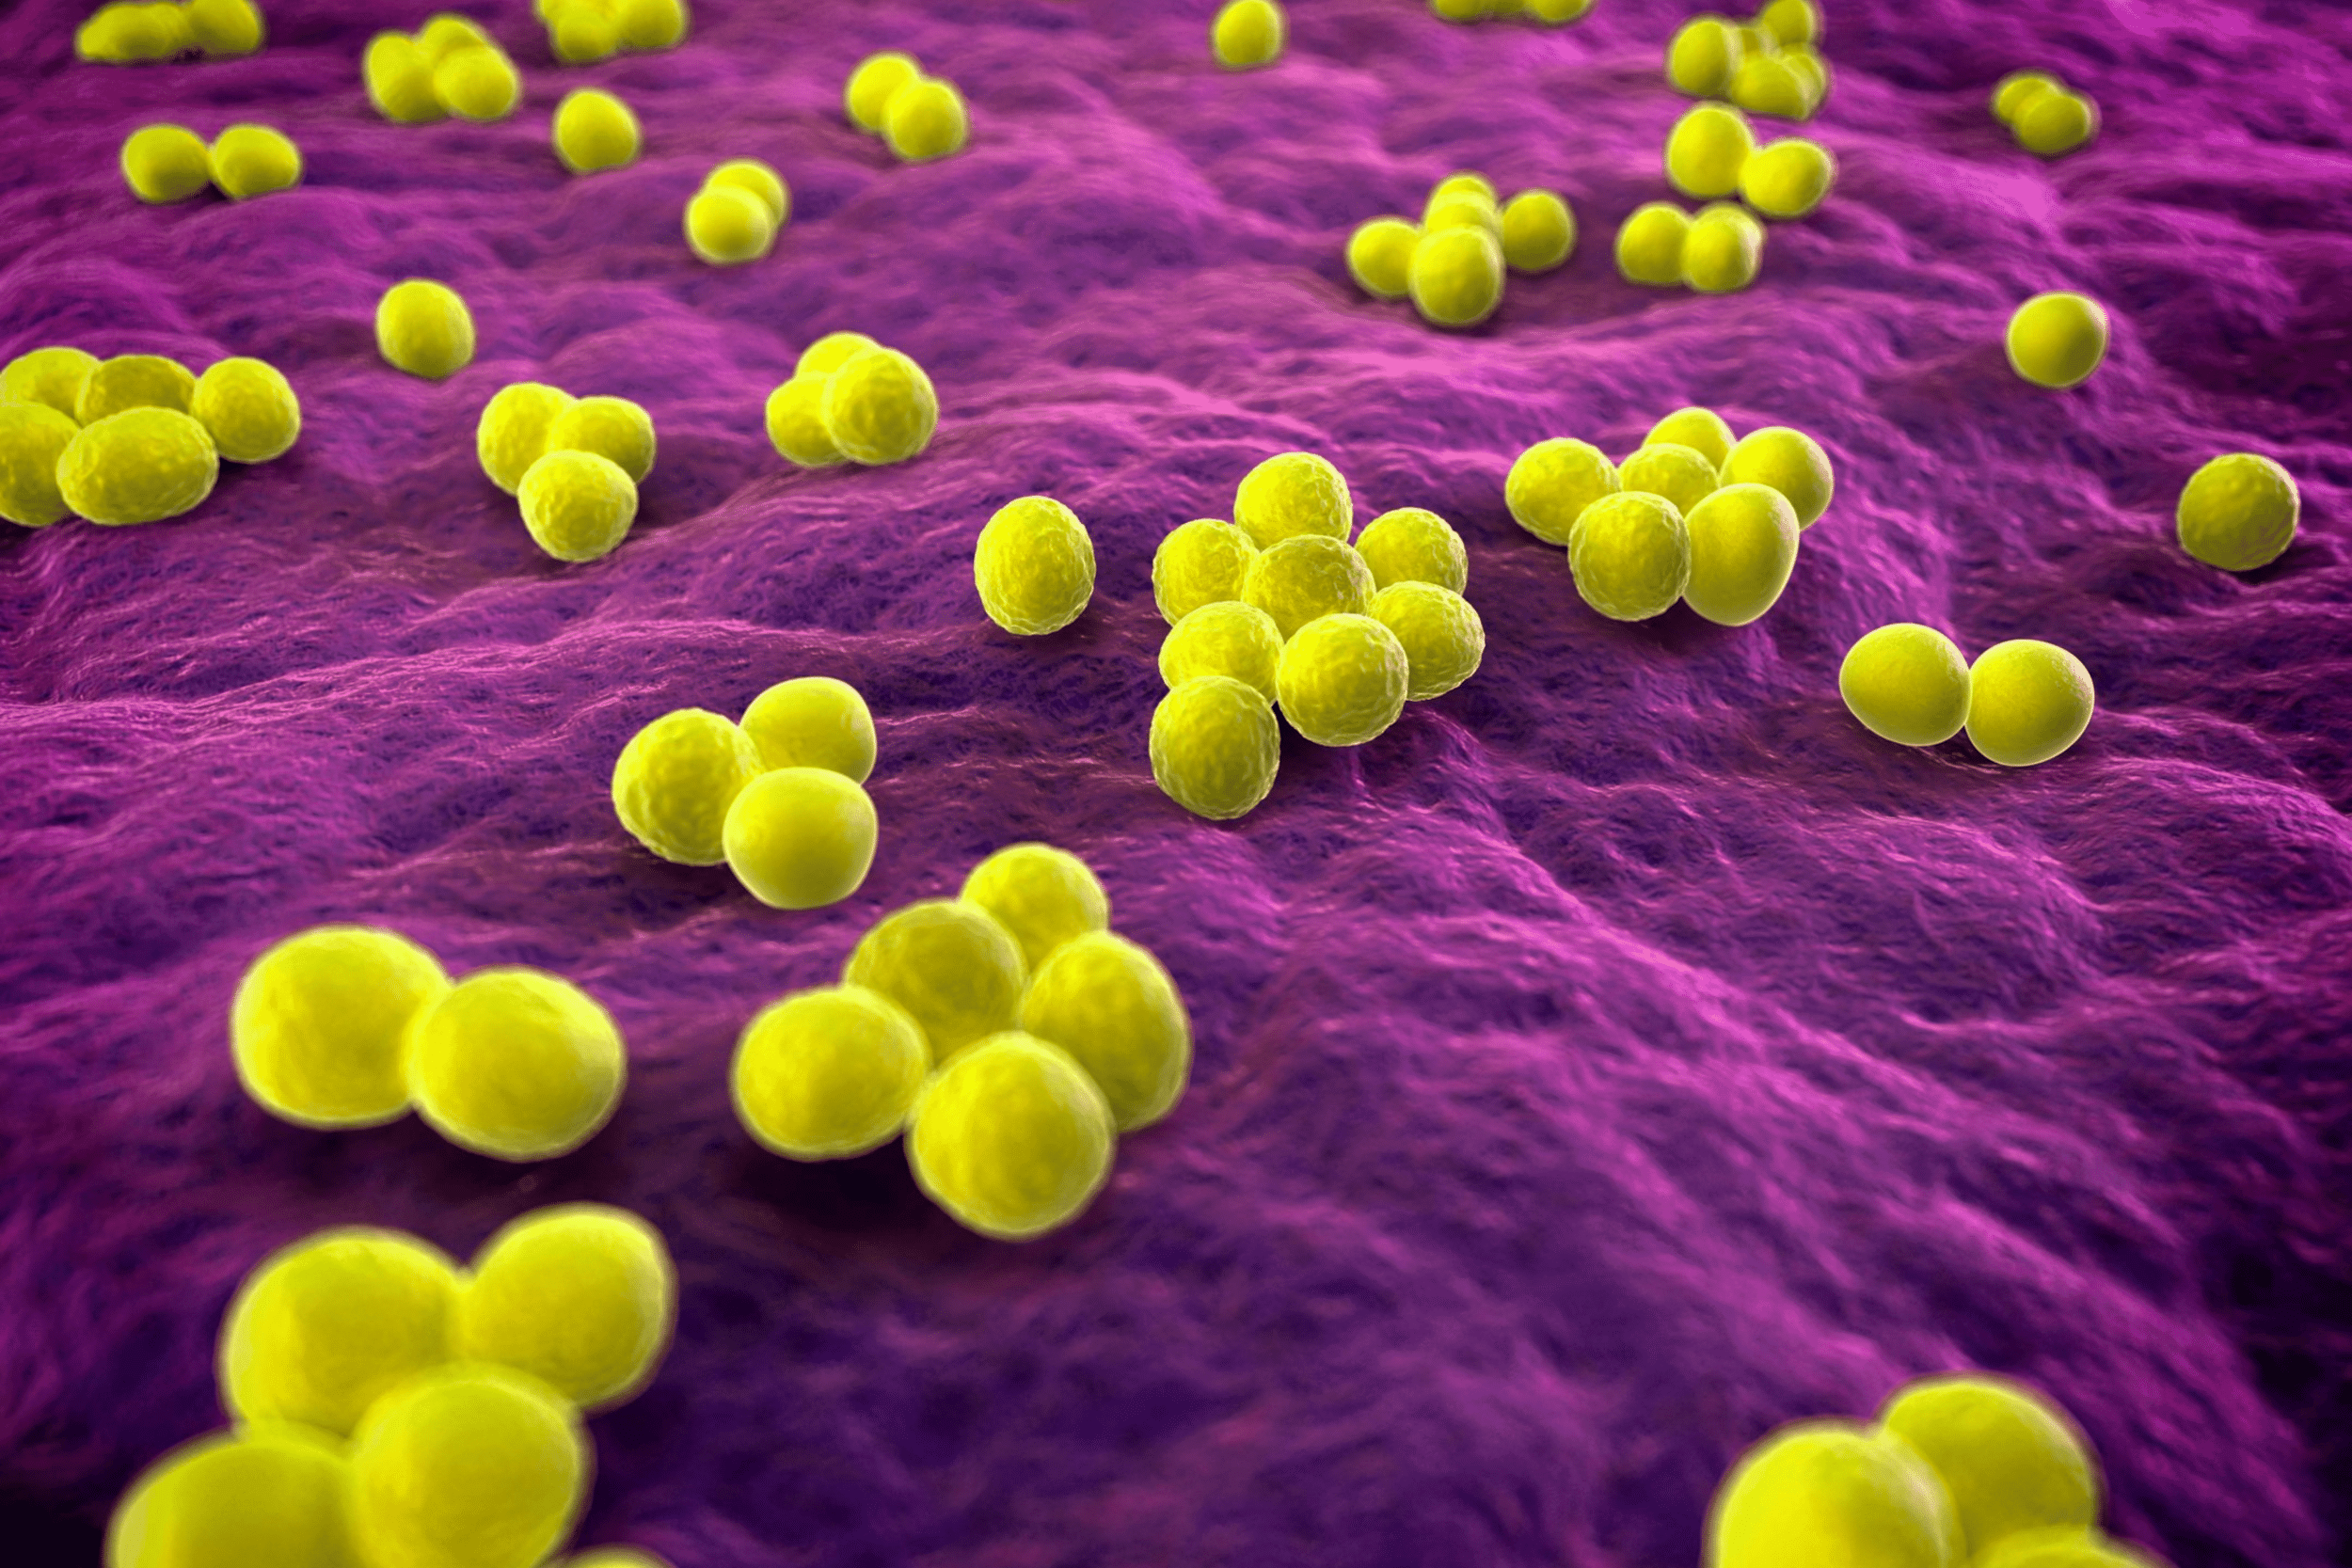 Methicillin resistant Staphylococcus Aureus MRSA